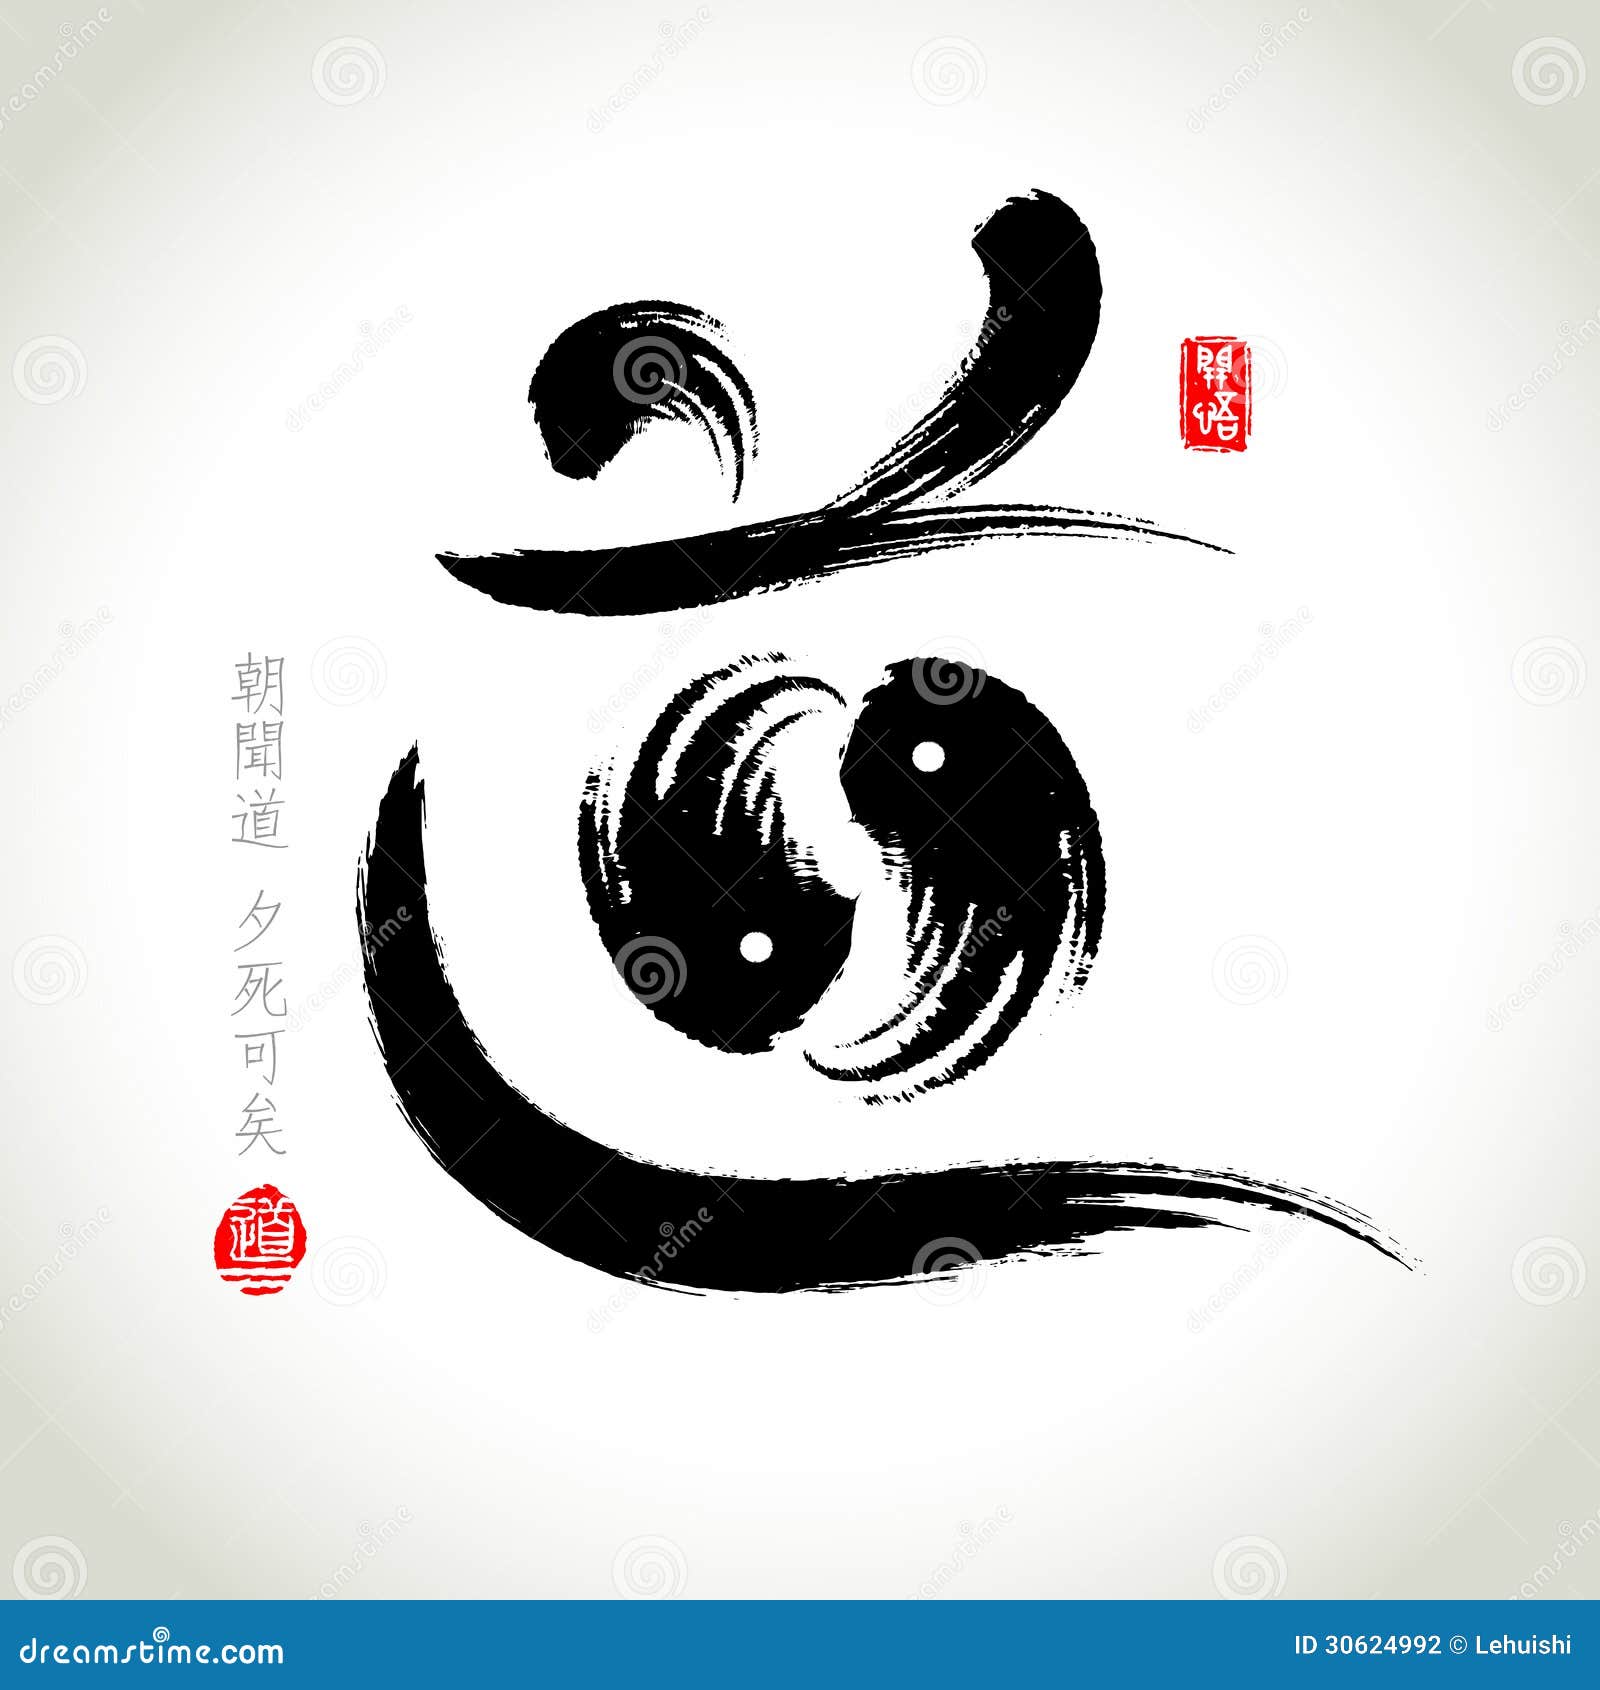 chinese hanzi penmanship calligraphy